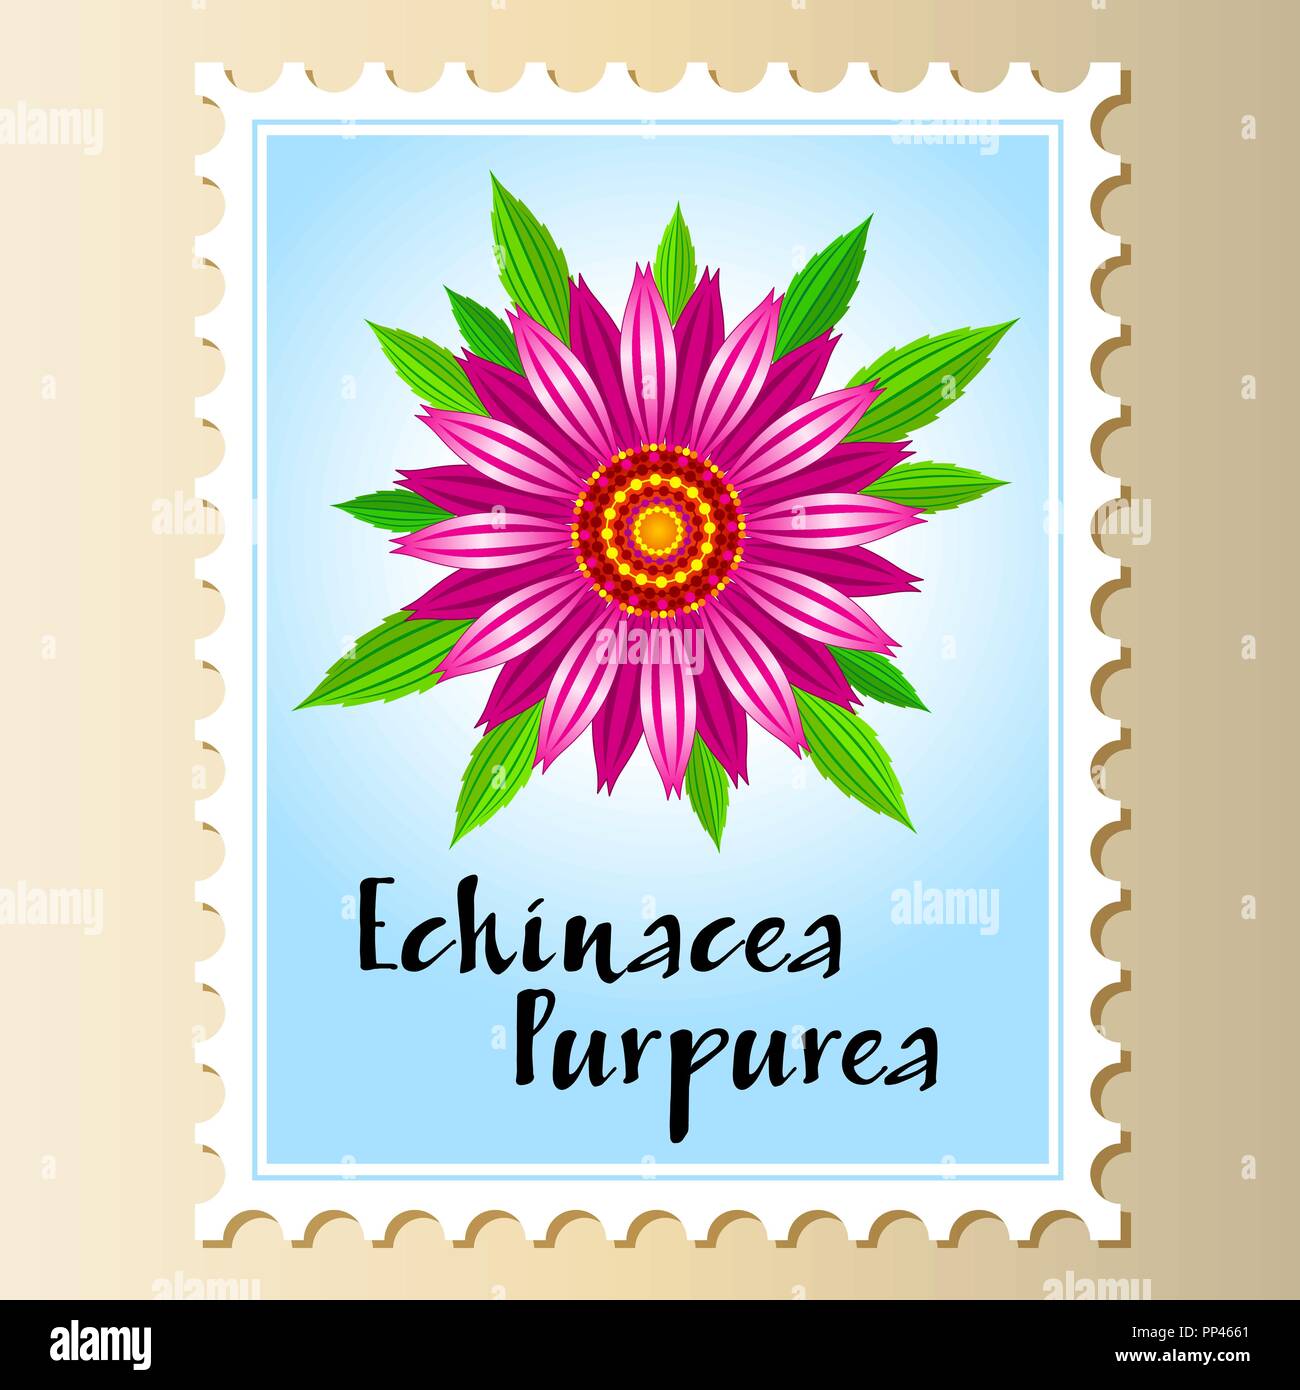 Echinacea purpurea vector flower on a postage stamp. Stock Vector